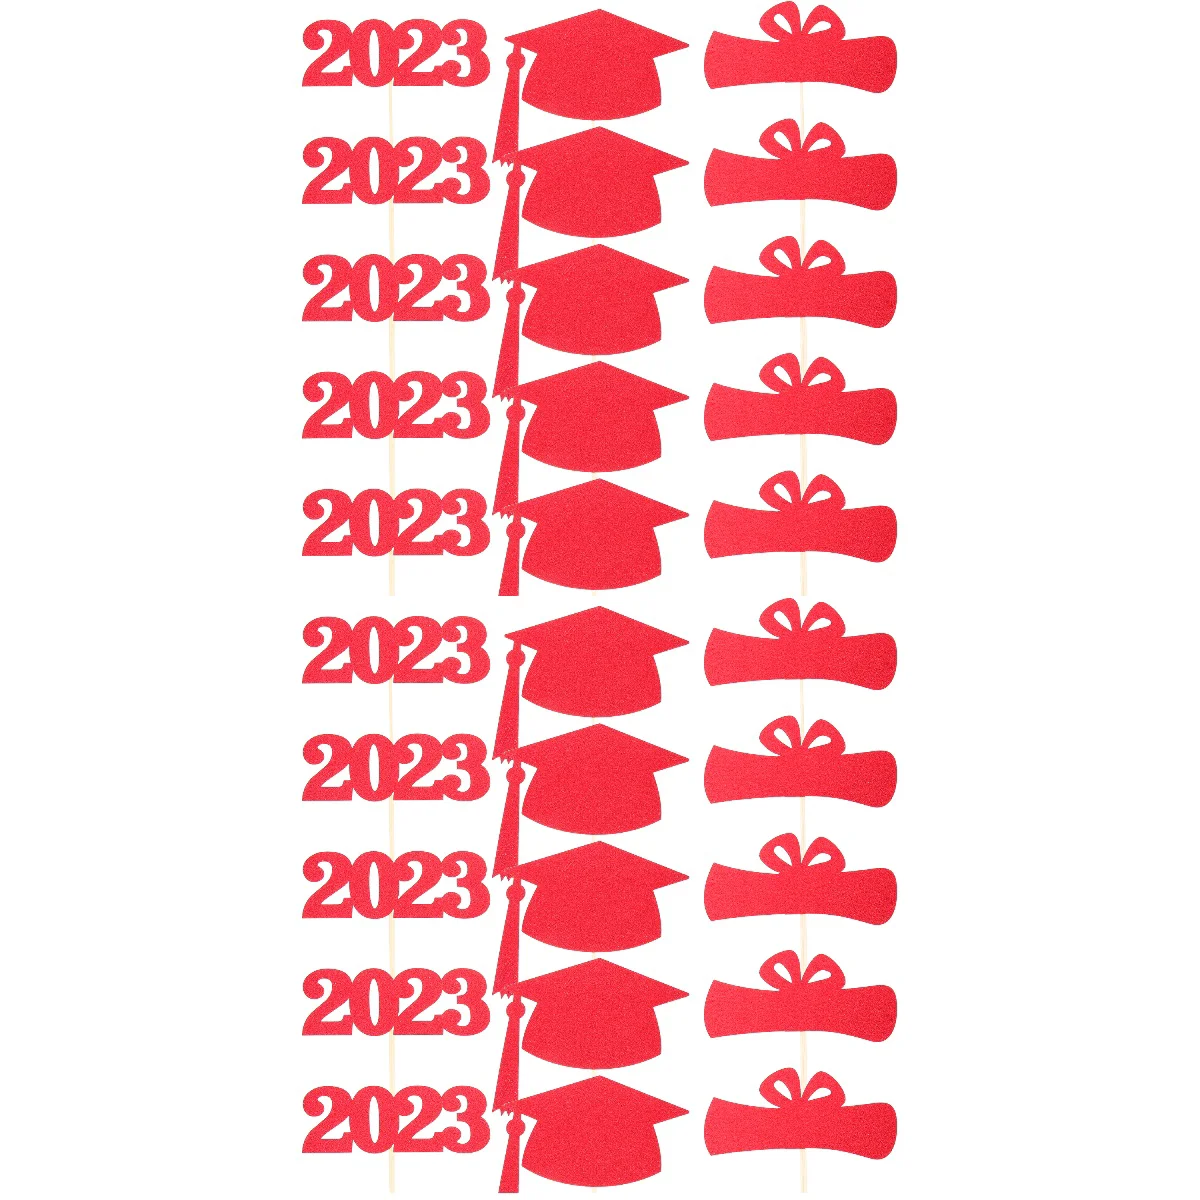 

10 Bags Graduation Vase Plugin Red Decor Party Centerpiece Label Decorations Wooden Ornament Flower Sticks Season Gnome